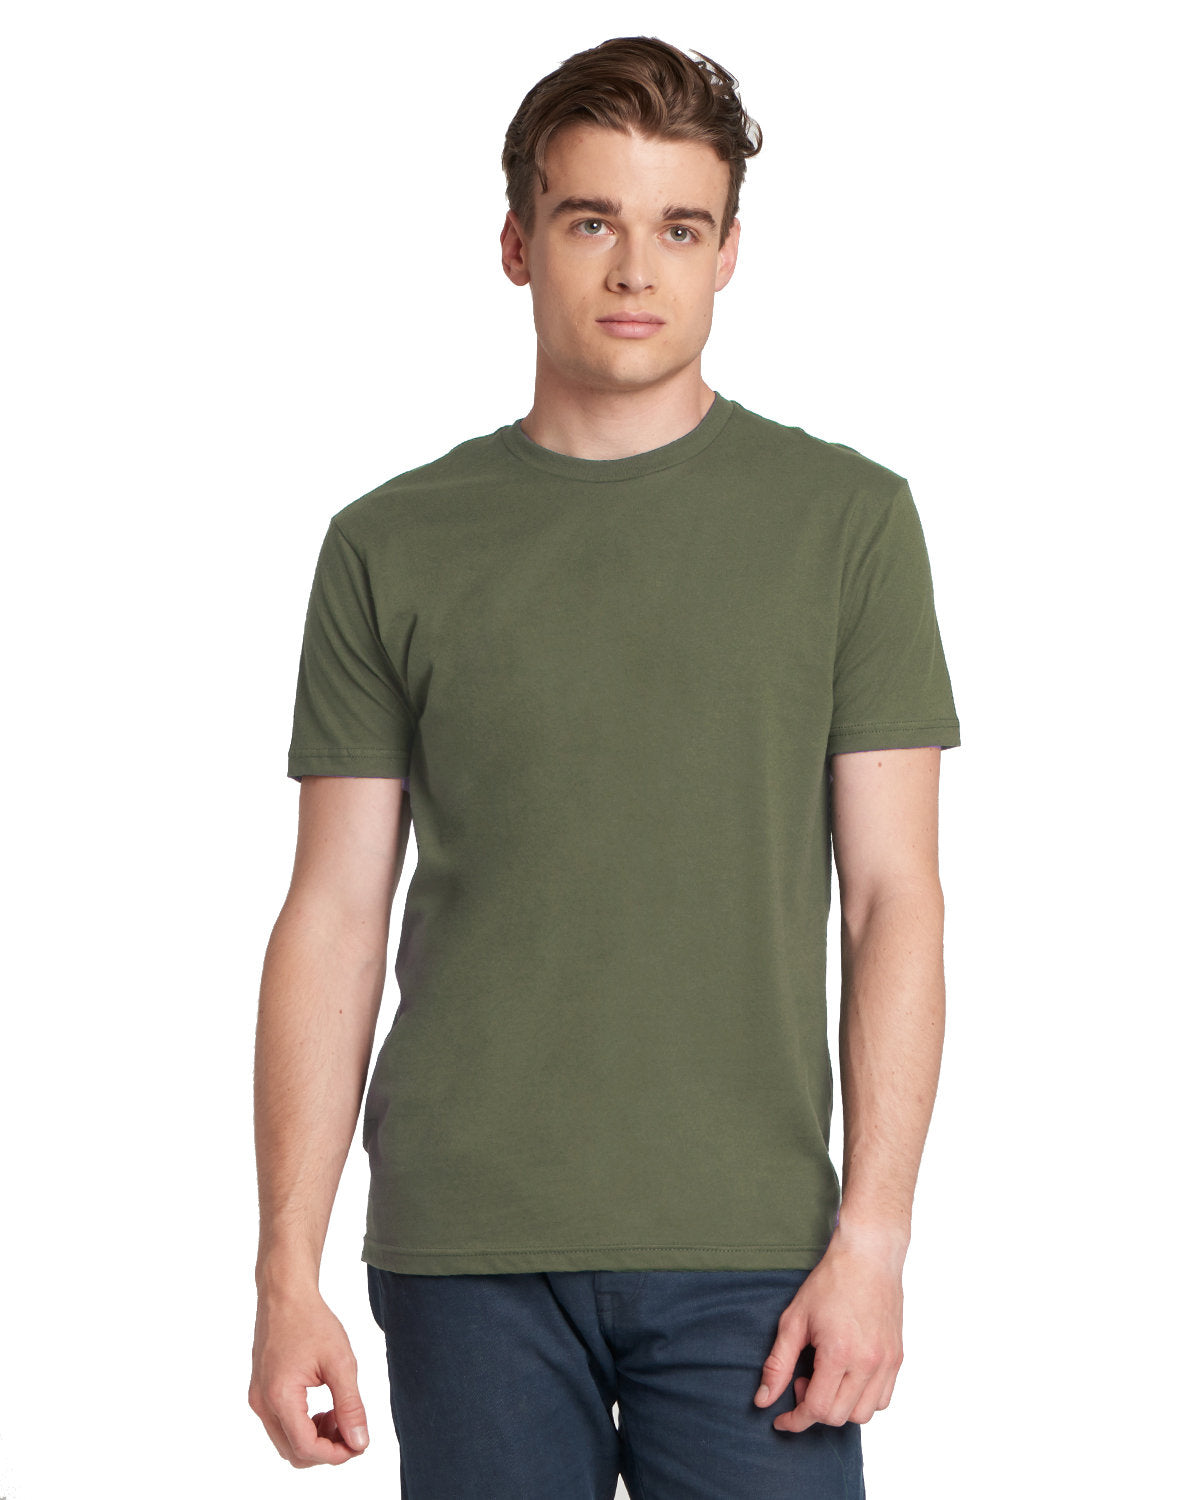 Military Green 100% Cotton Next Level T-shirt 